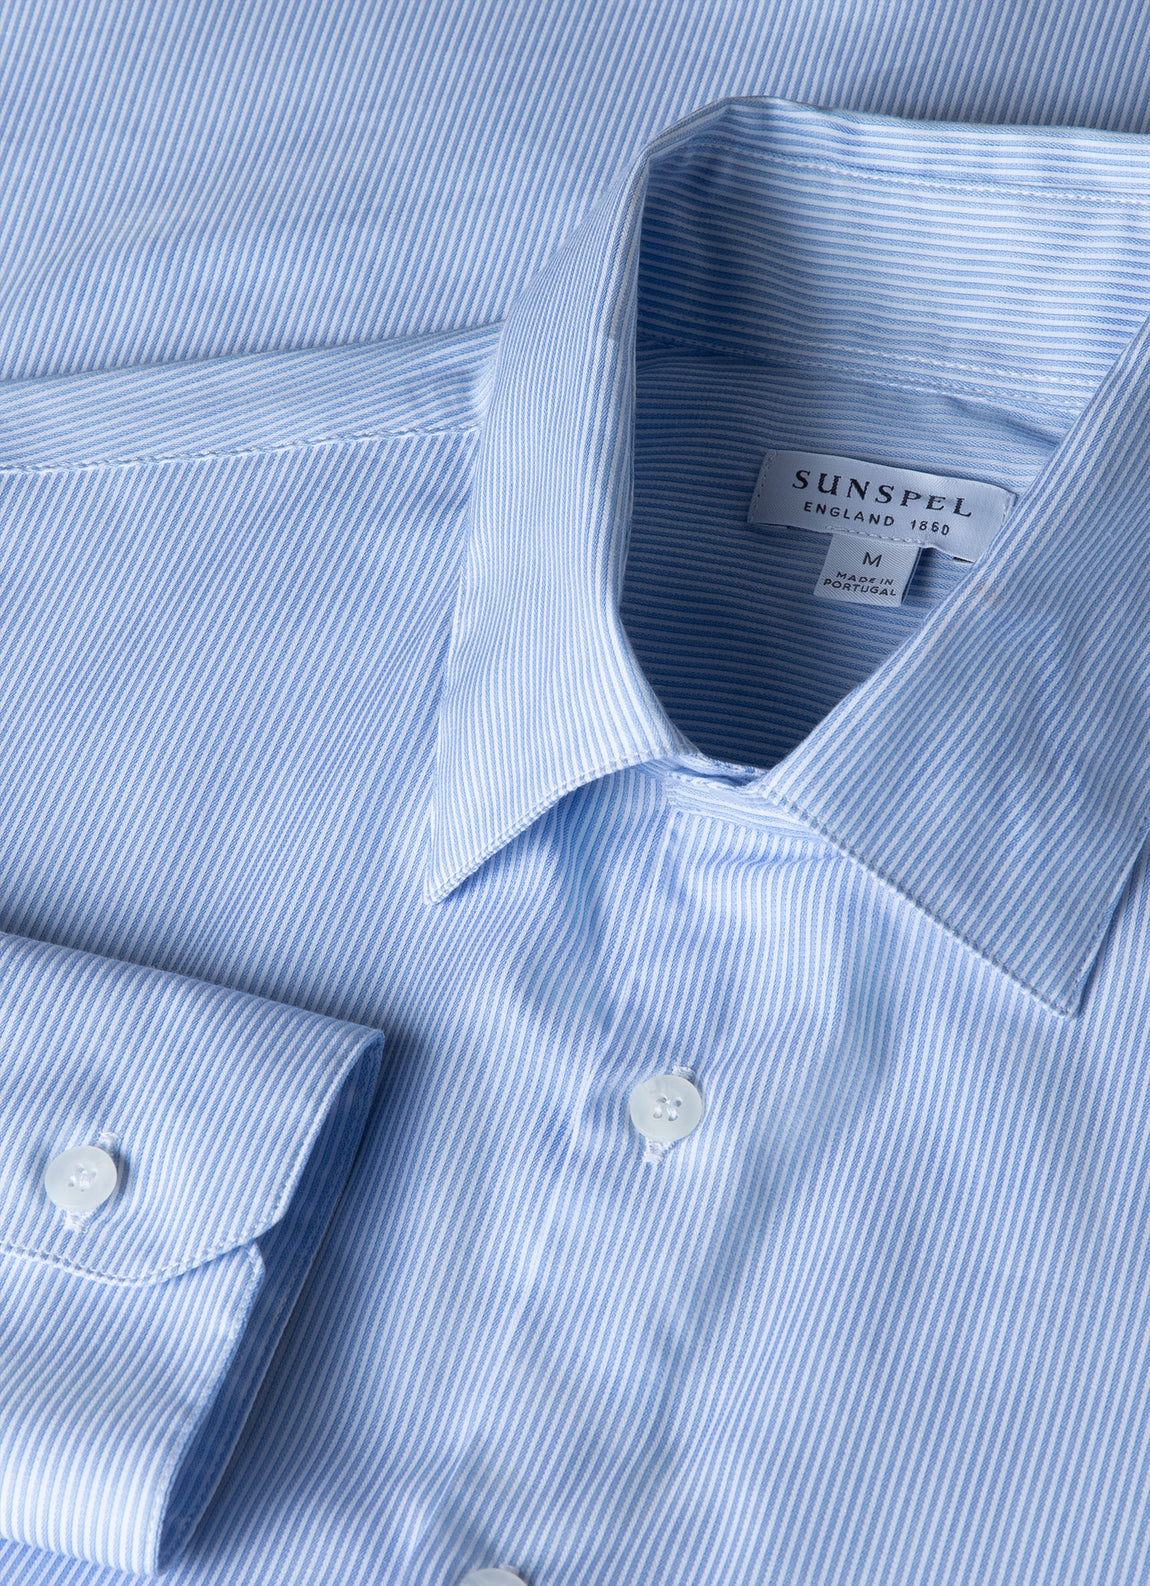 Men's Cotton Stretch Shirt in Light Blue/White | Sunspel